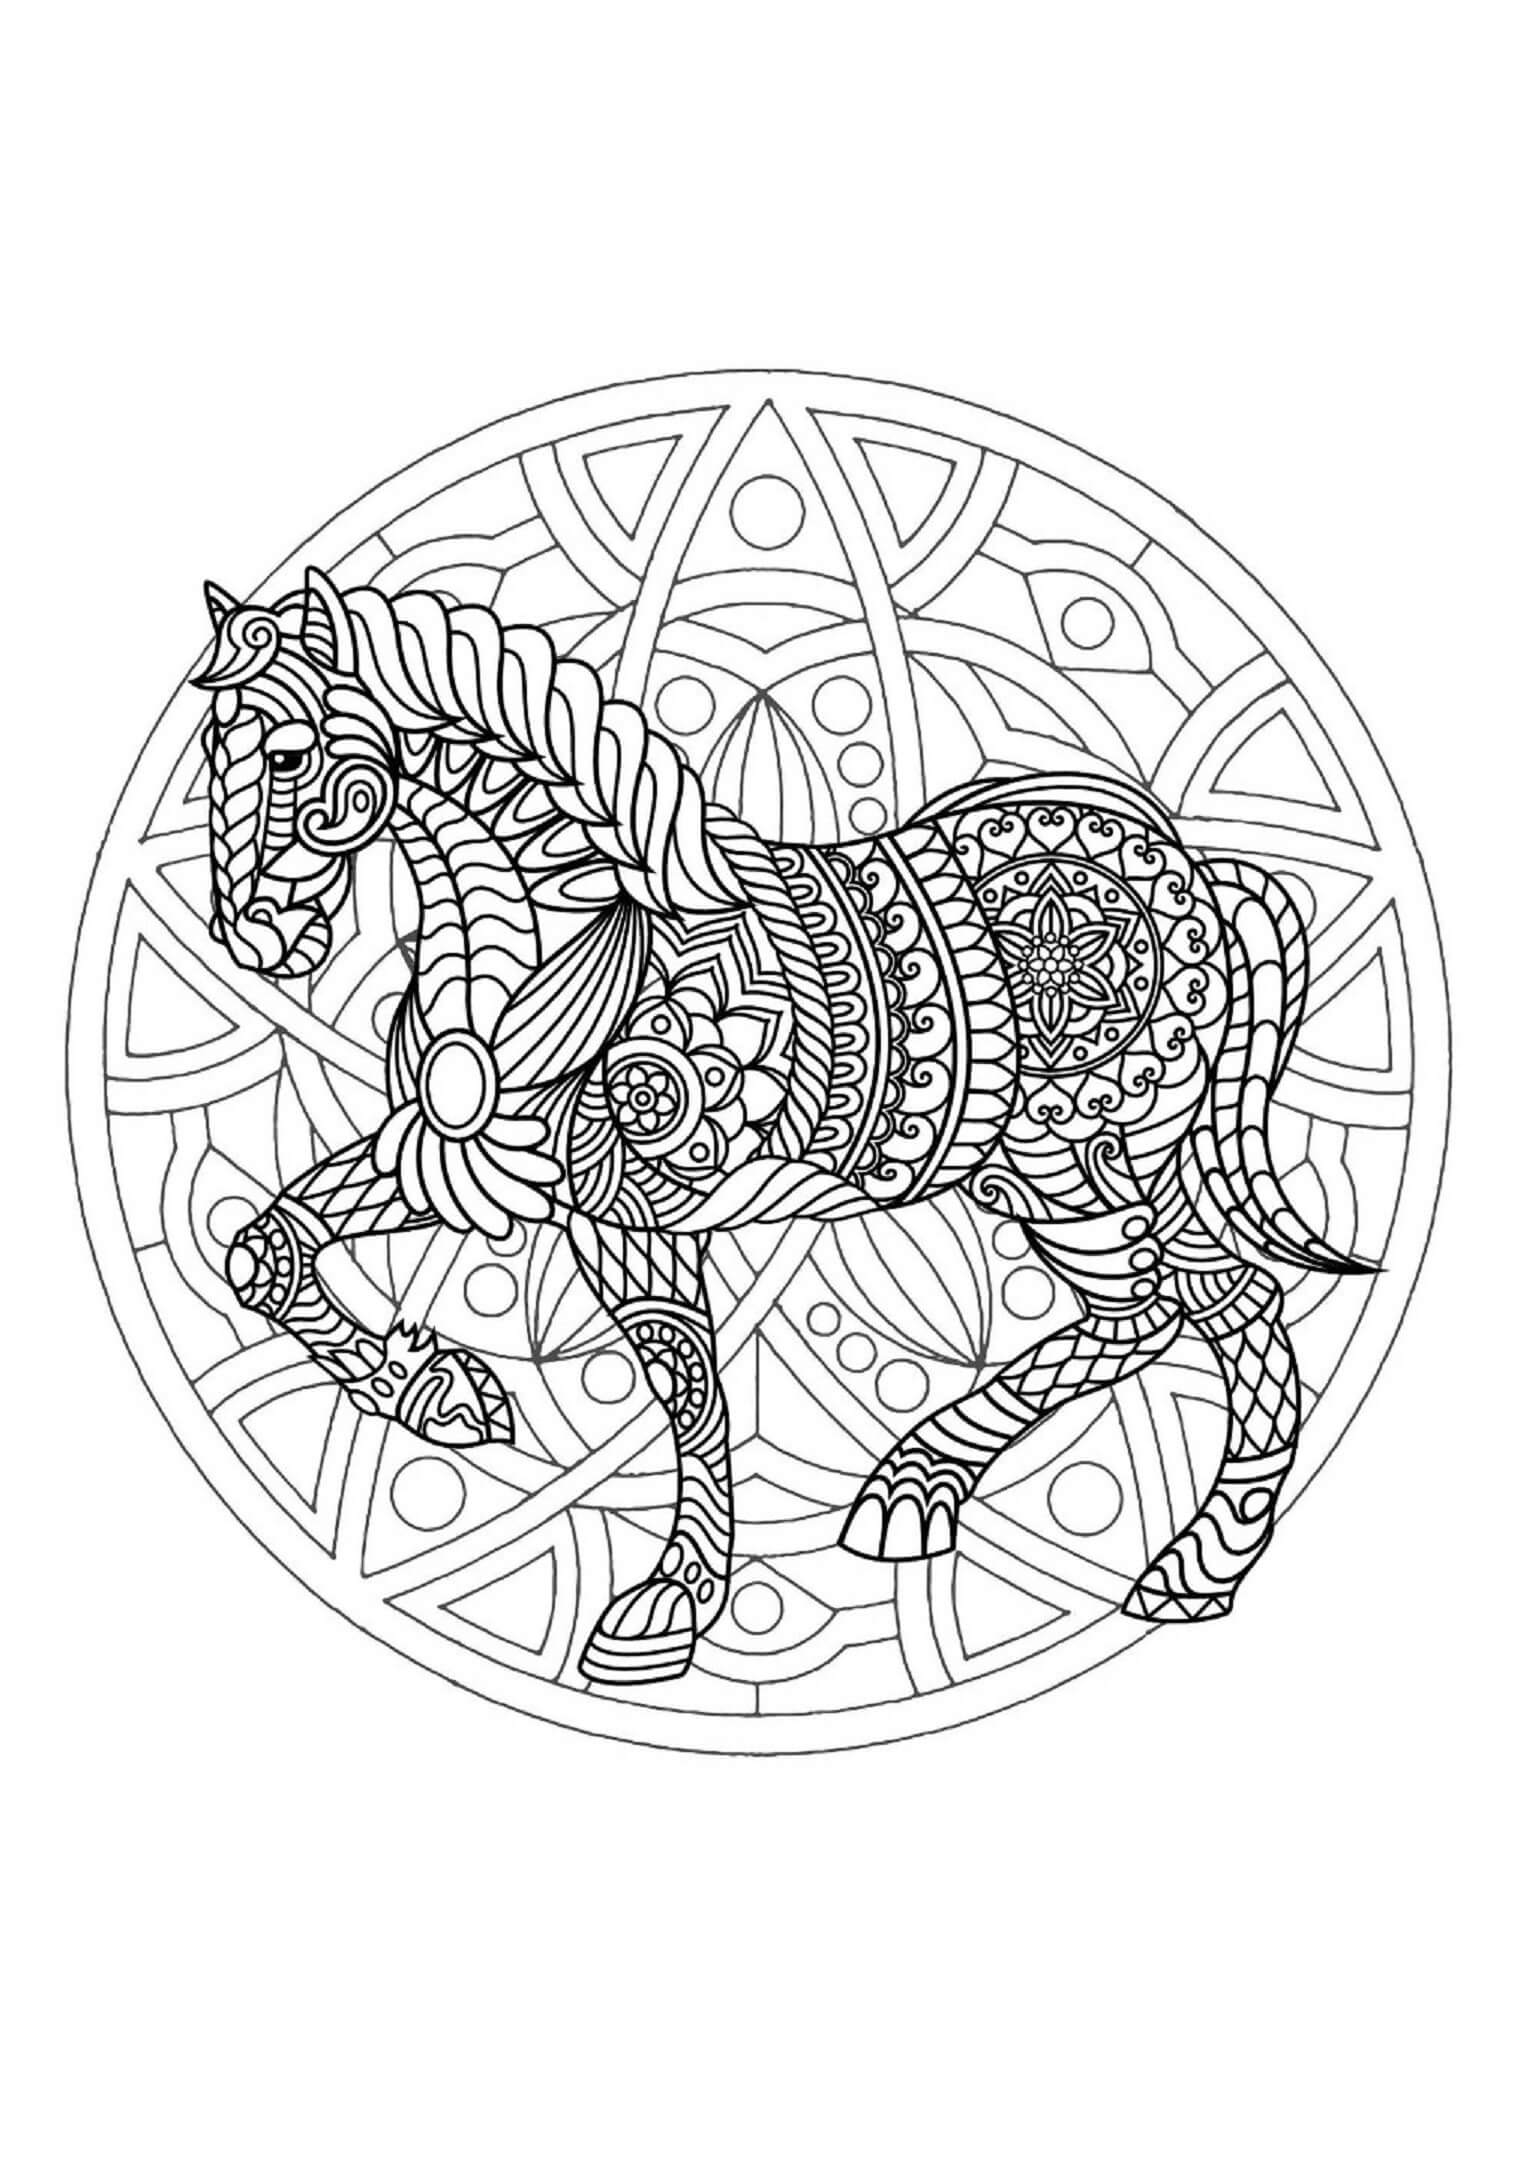 Mandala Horse Coloring Page - Sheet 7 Mandalas